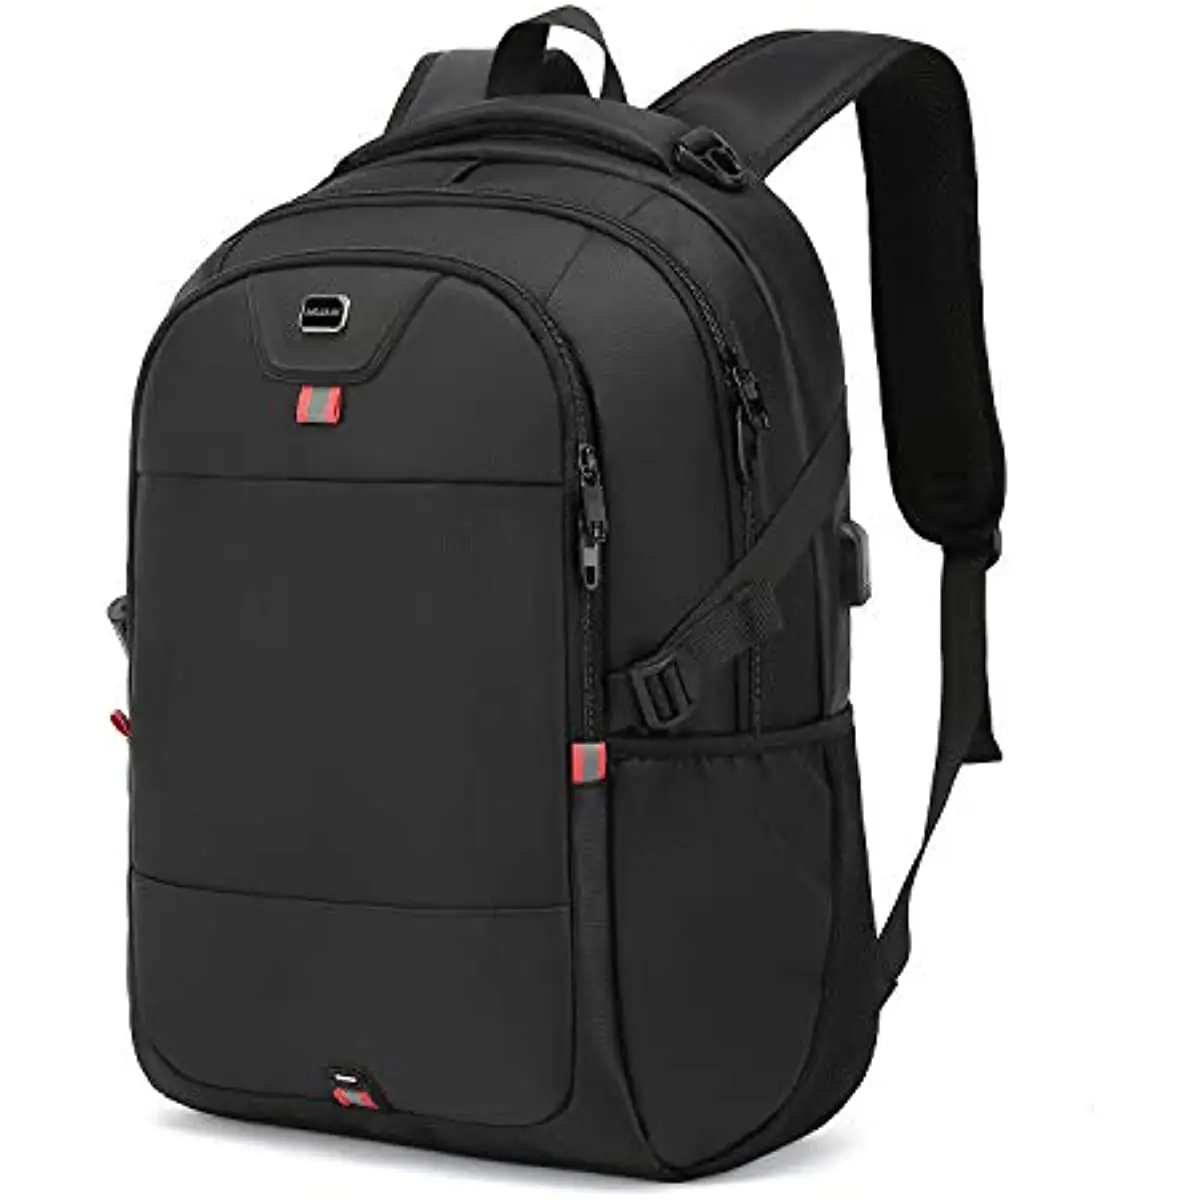 New Arrivals Backpacks Durable College Travel USB Charging Port Best Gift book bags for Men Women Boys Girls Students